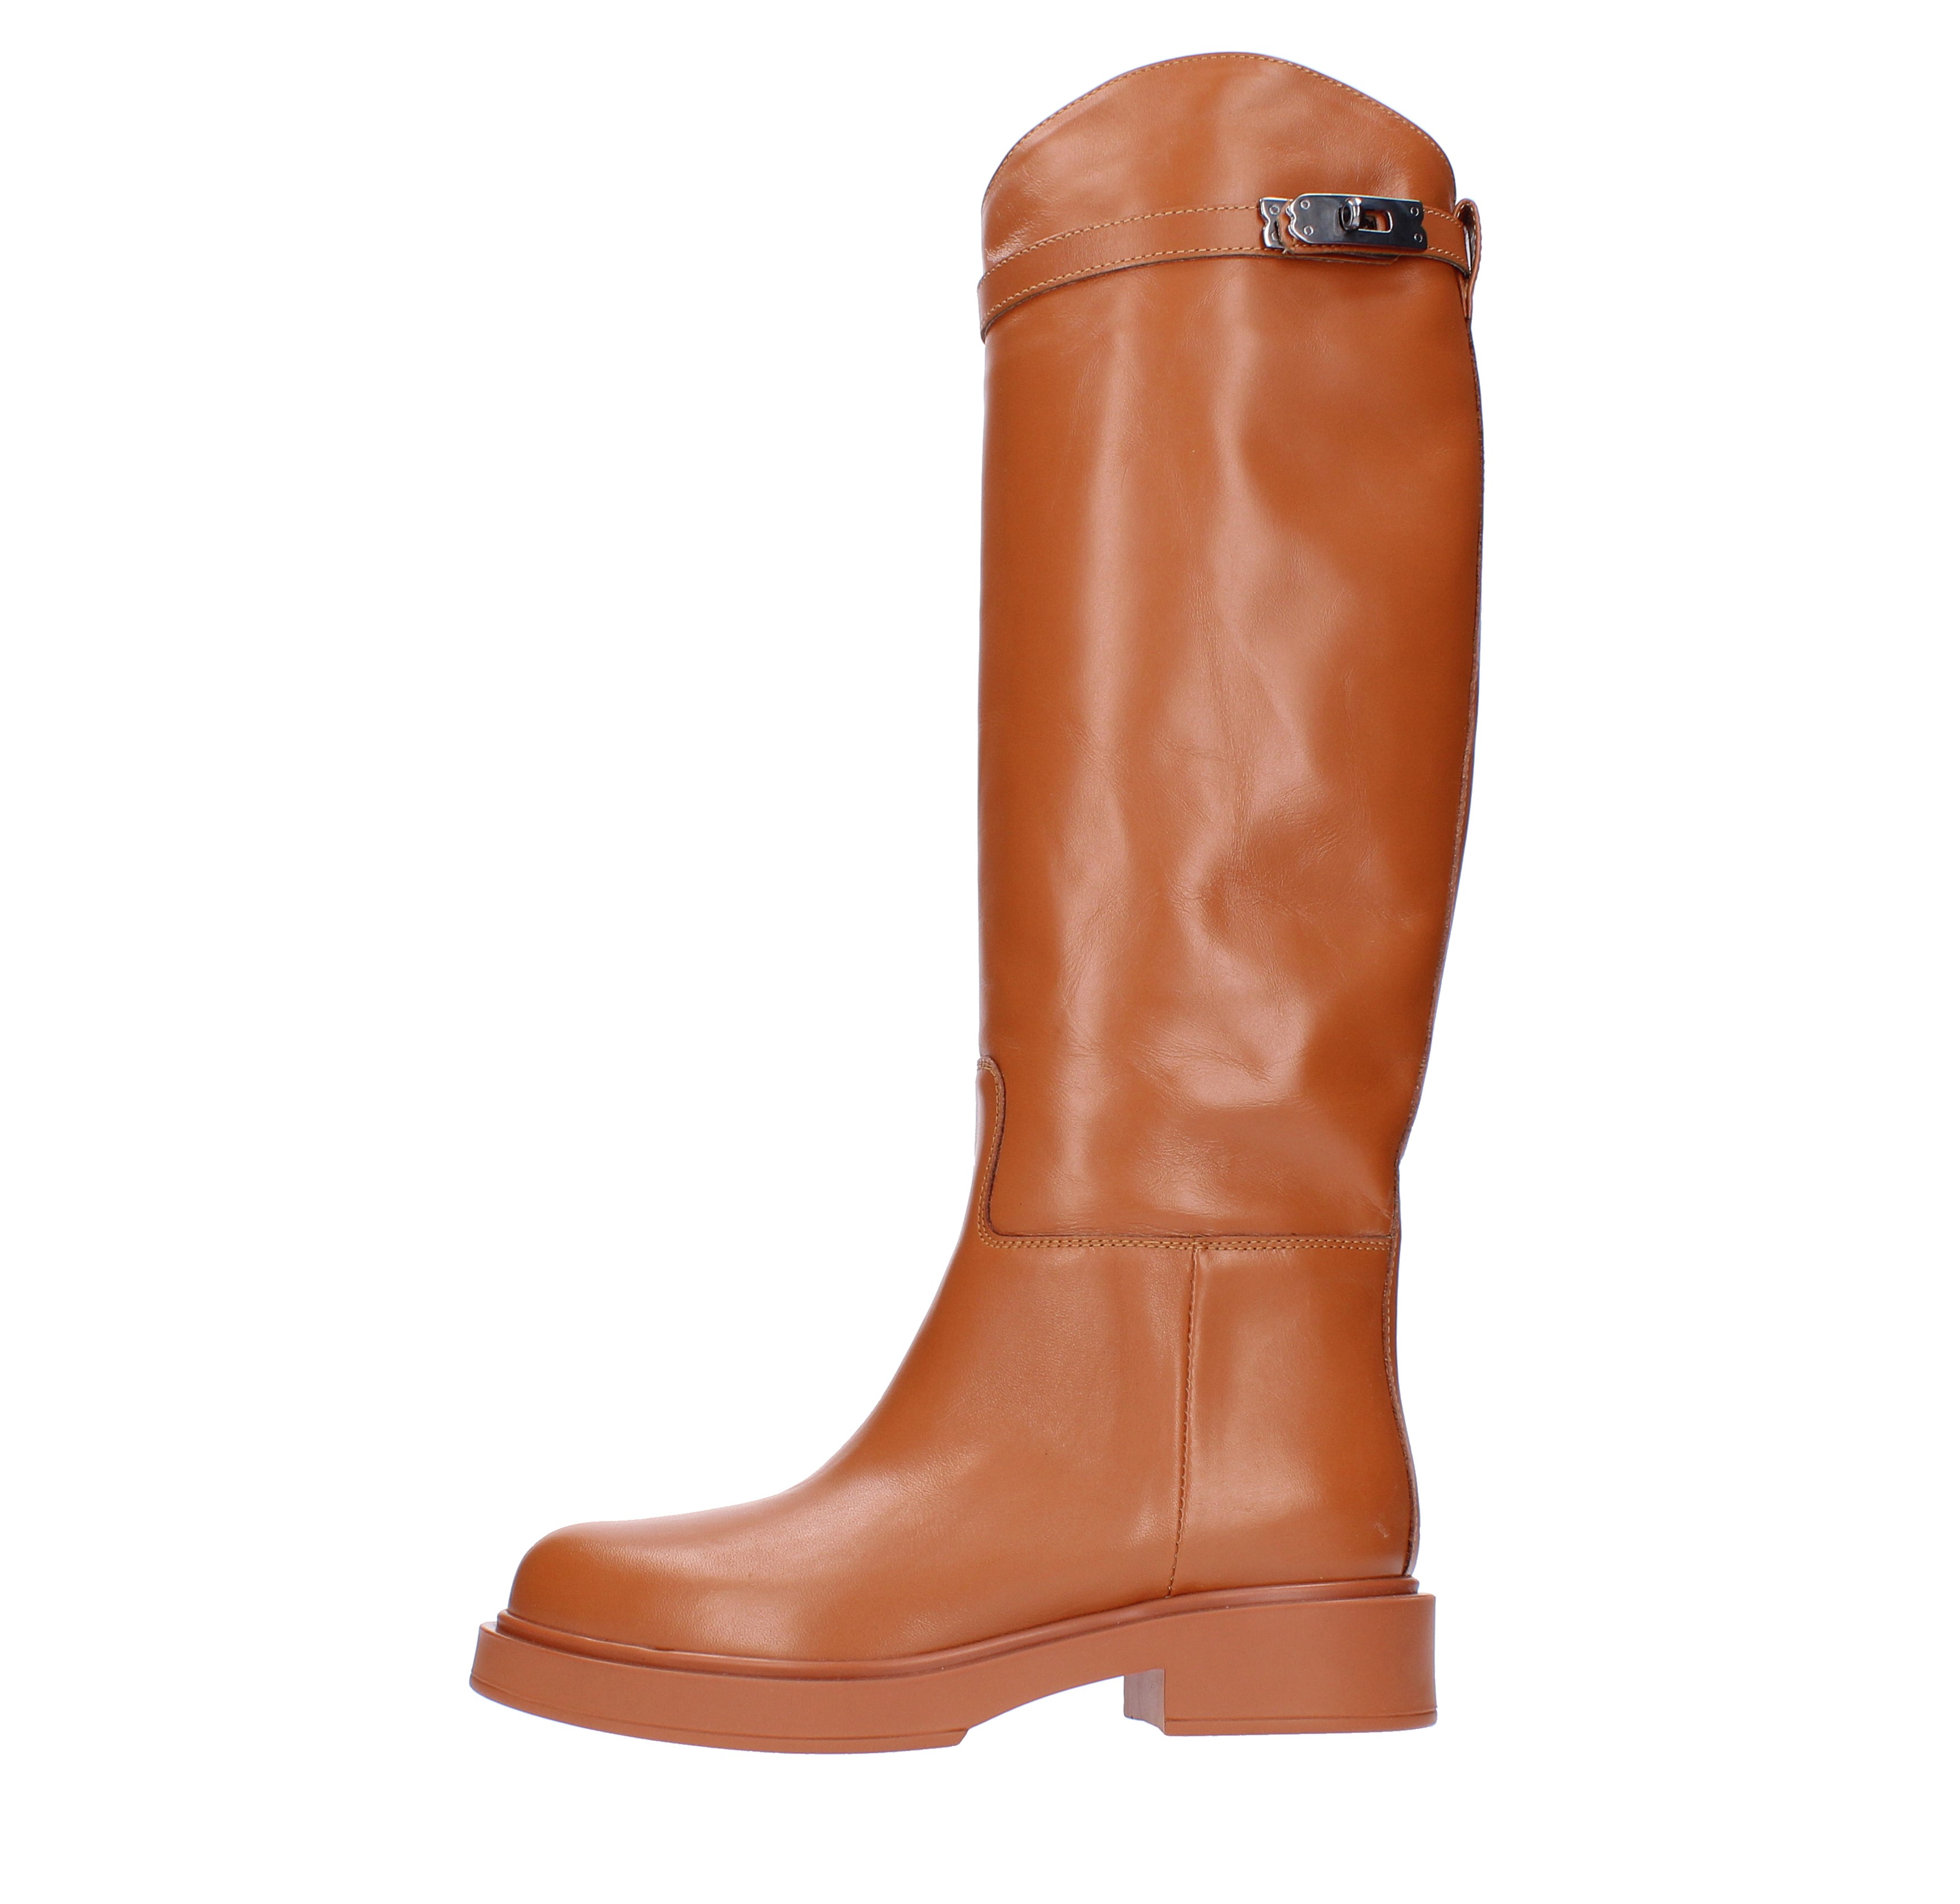 Leather boots - PH 5.5 - Ginevra calzature